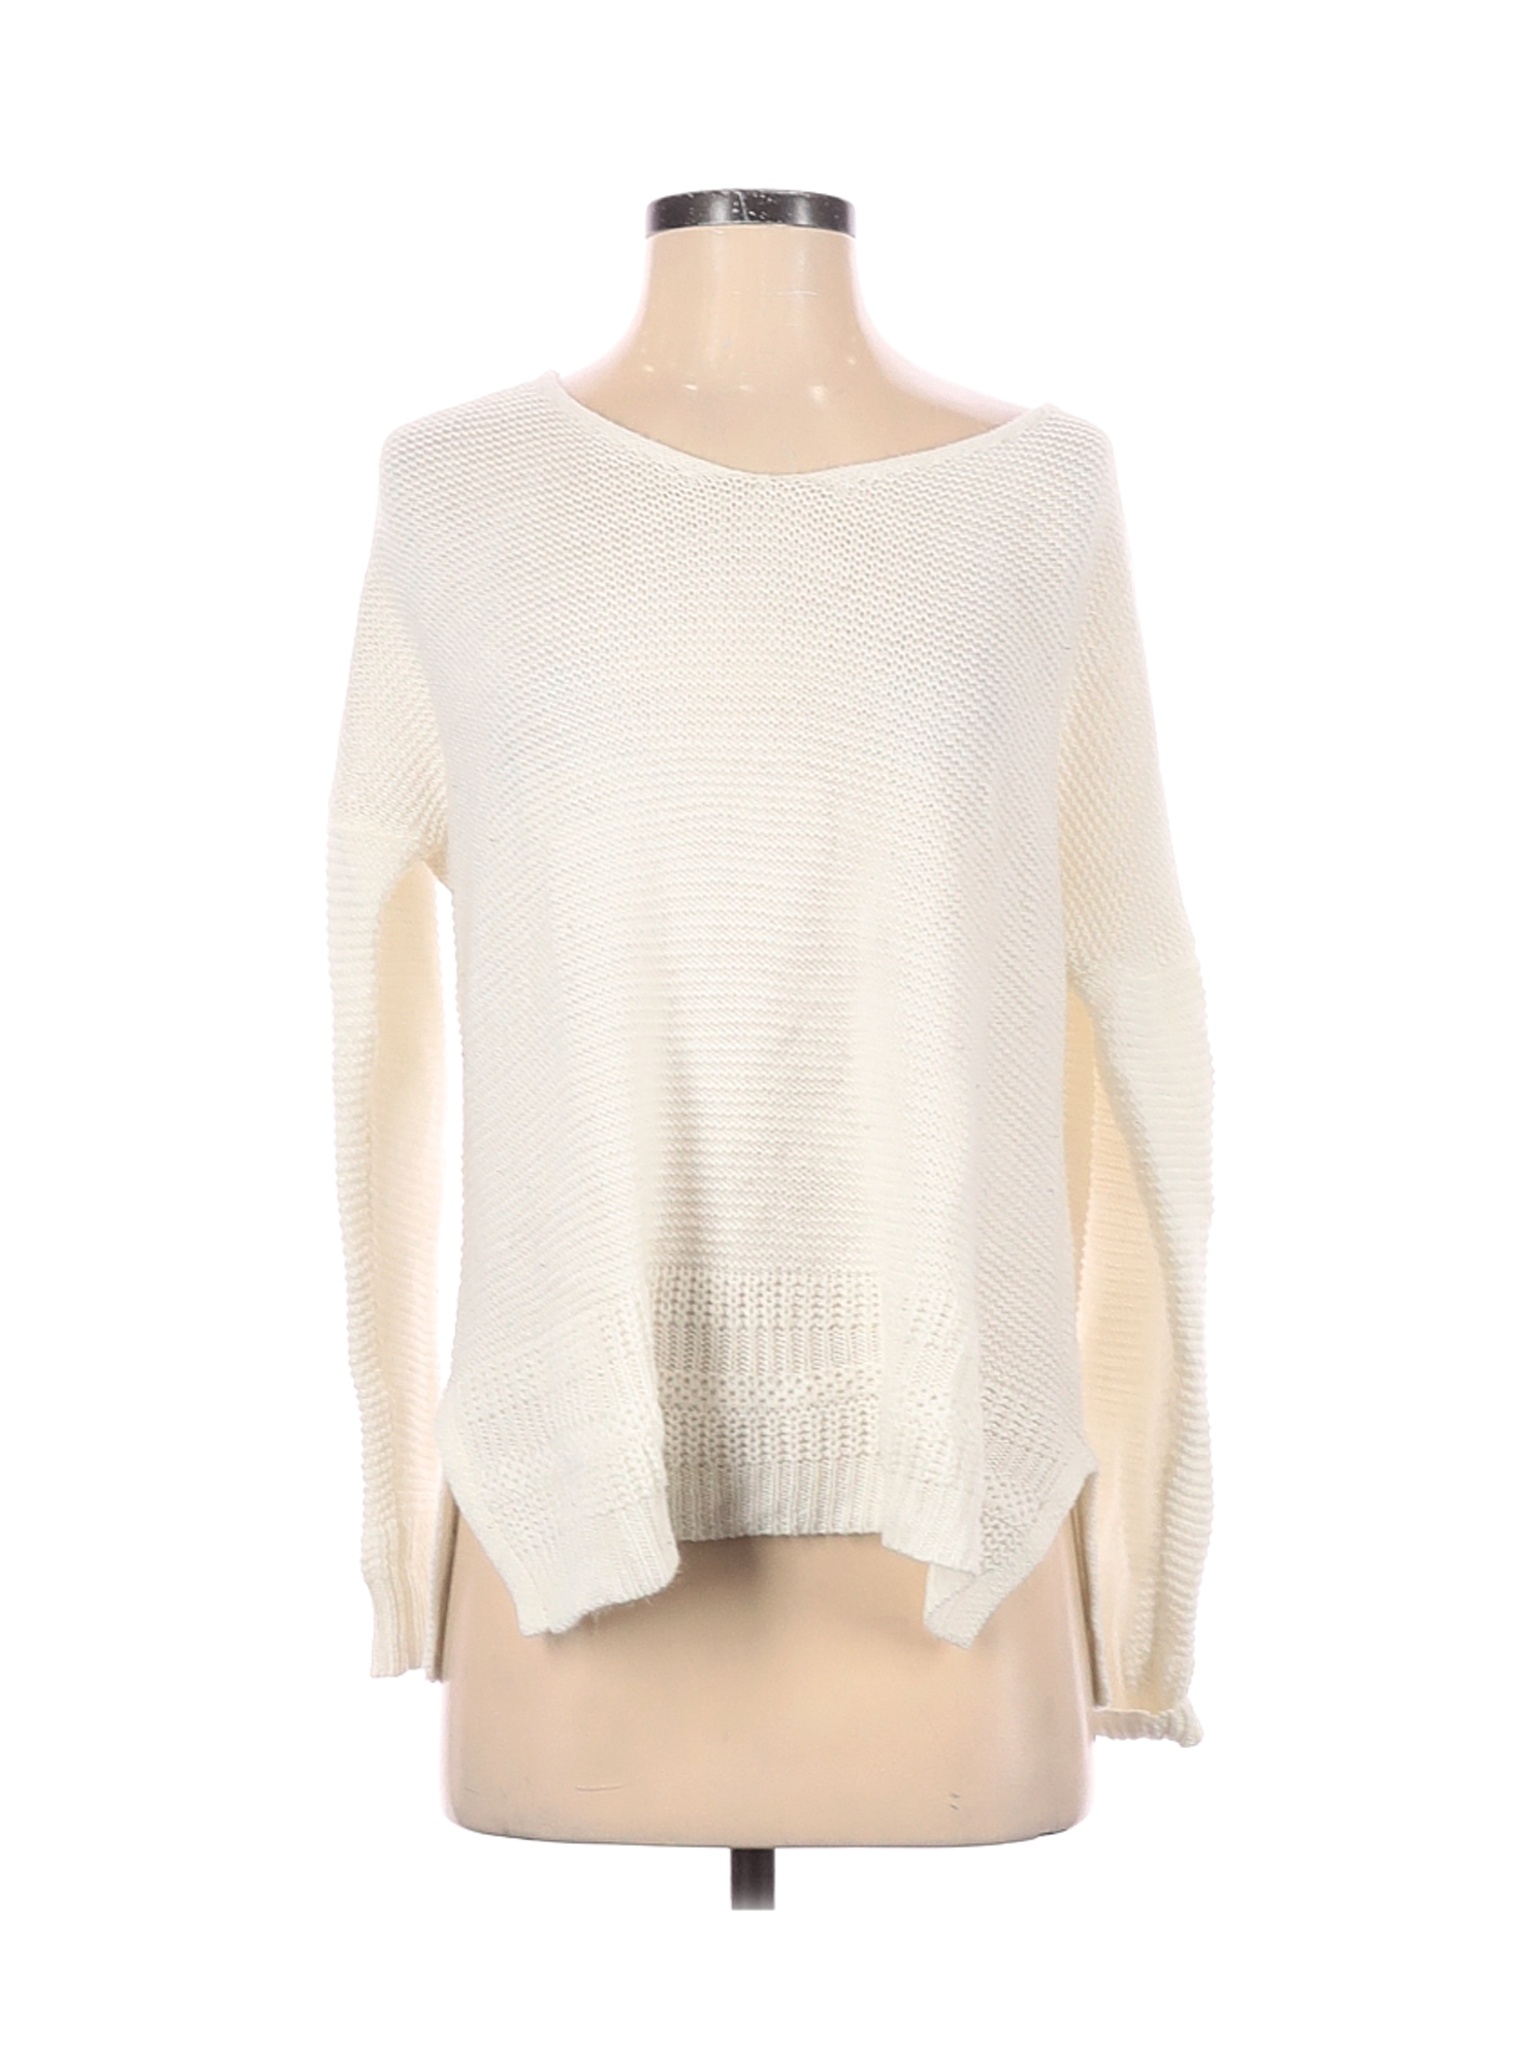 Charlotte Russe Women Ivory Pullover Sweater S | eBay